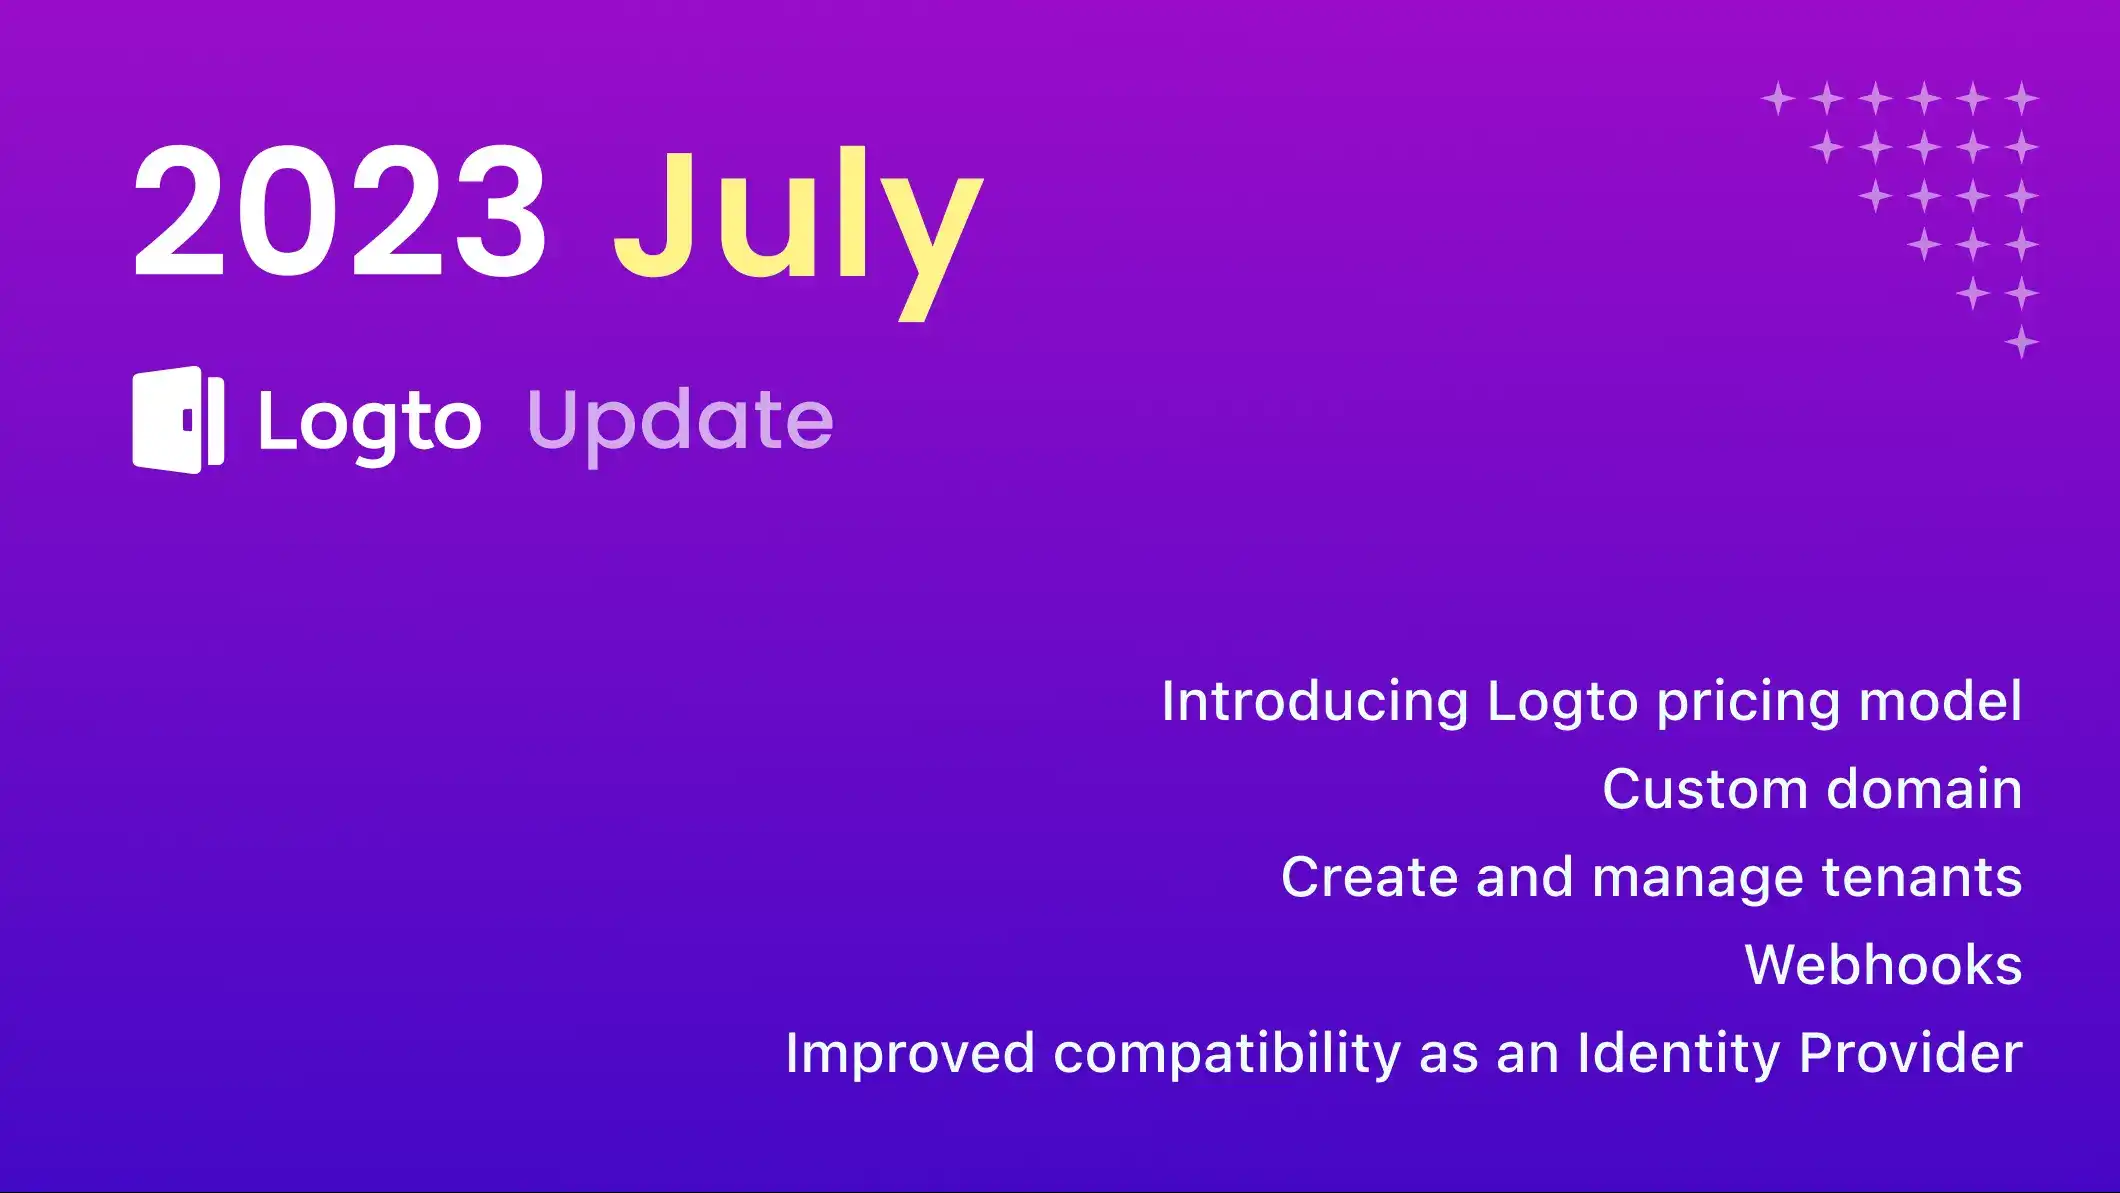 Logto 2023 July update